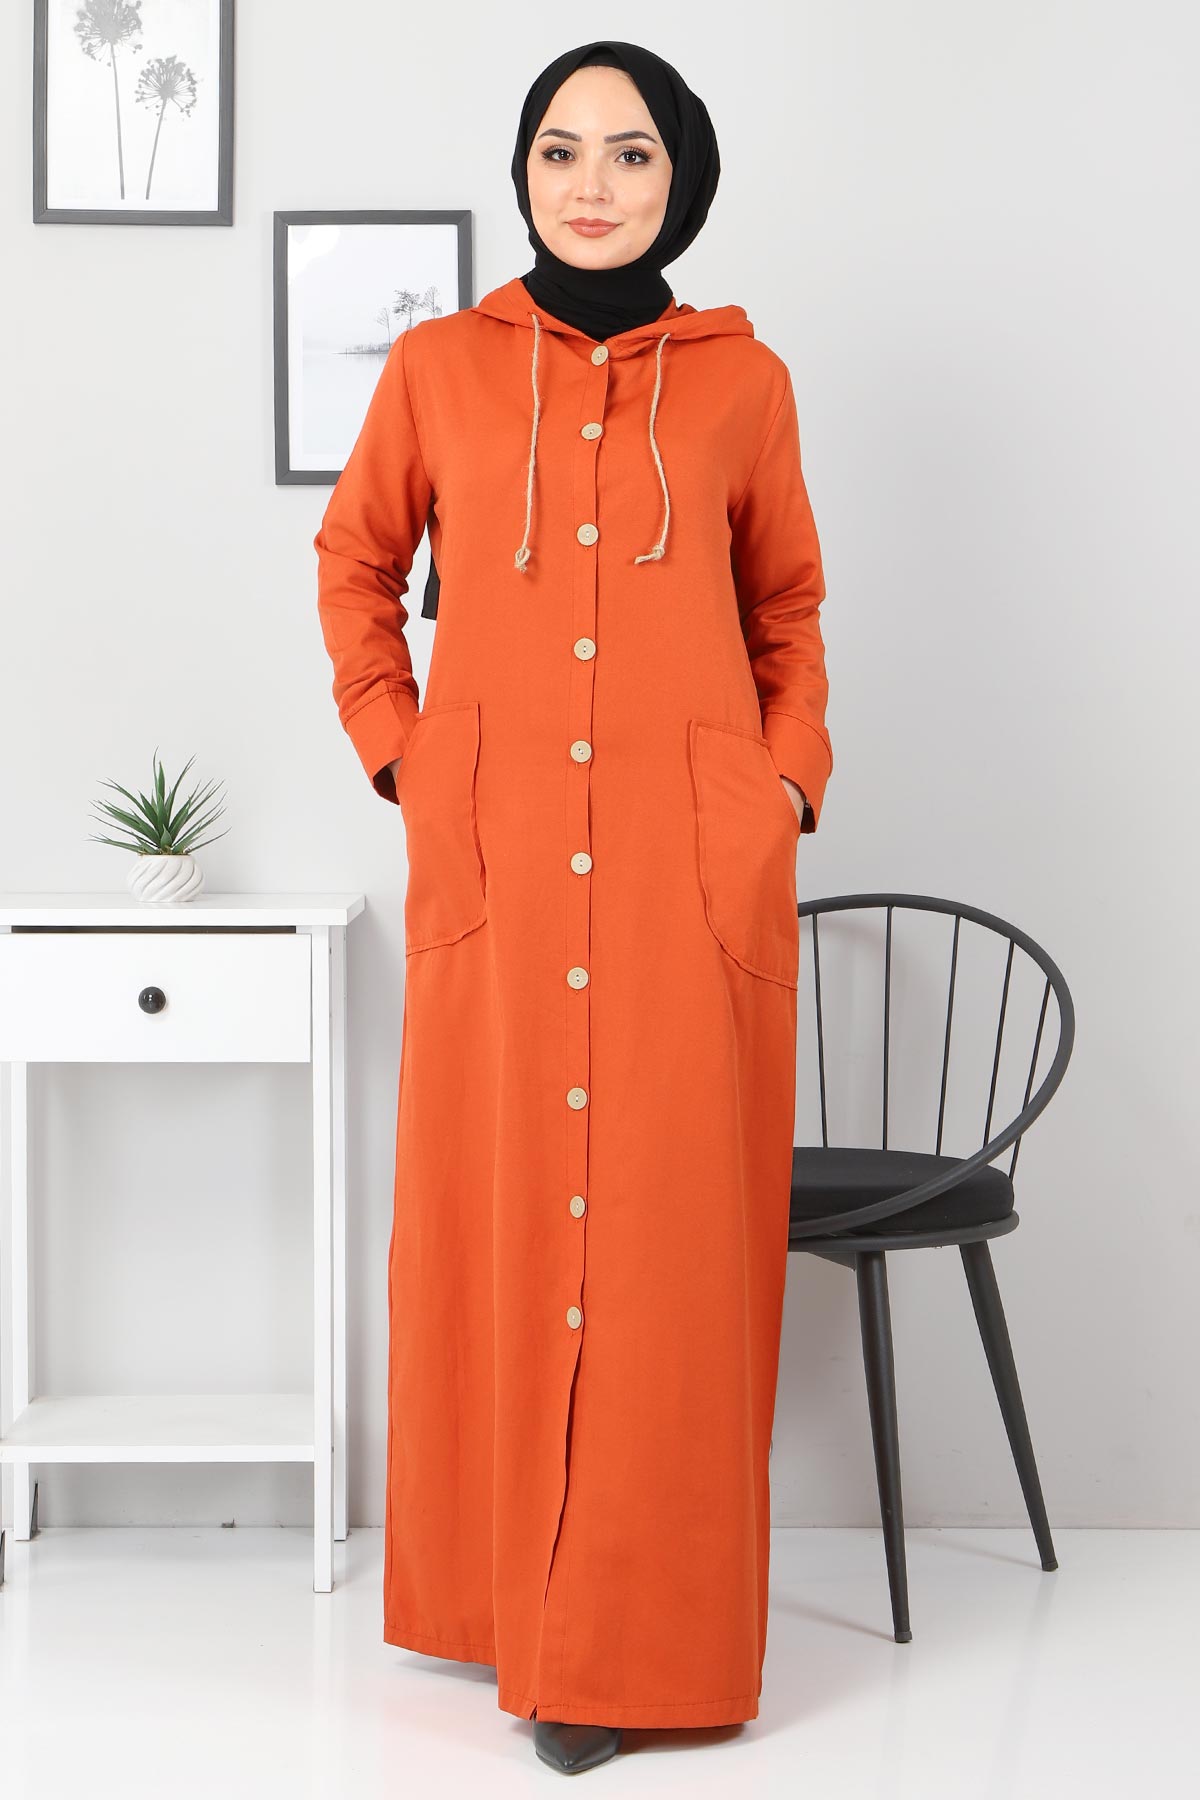 Tesettür Dünyası - Hooded Full Length Cap with Wooden Button TSD3395 Orange